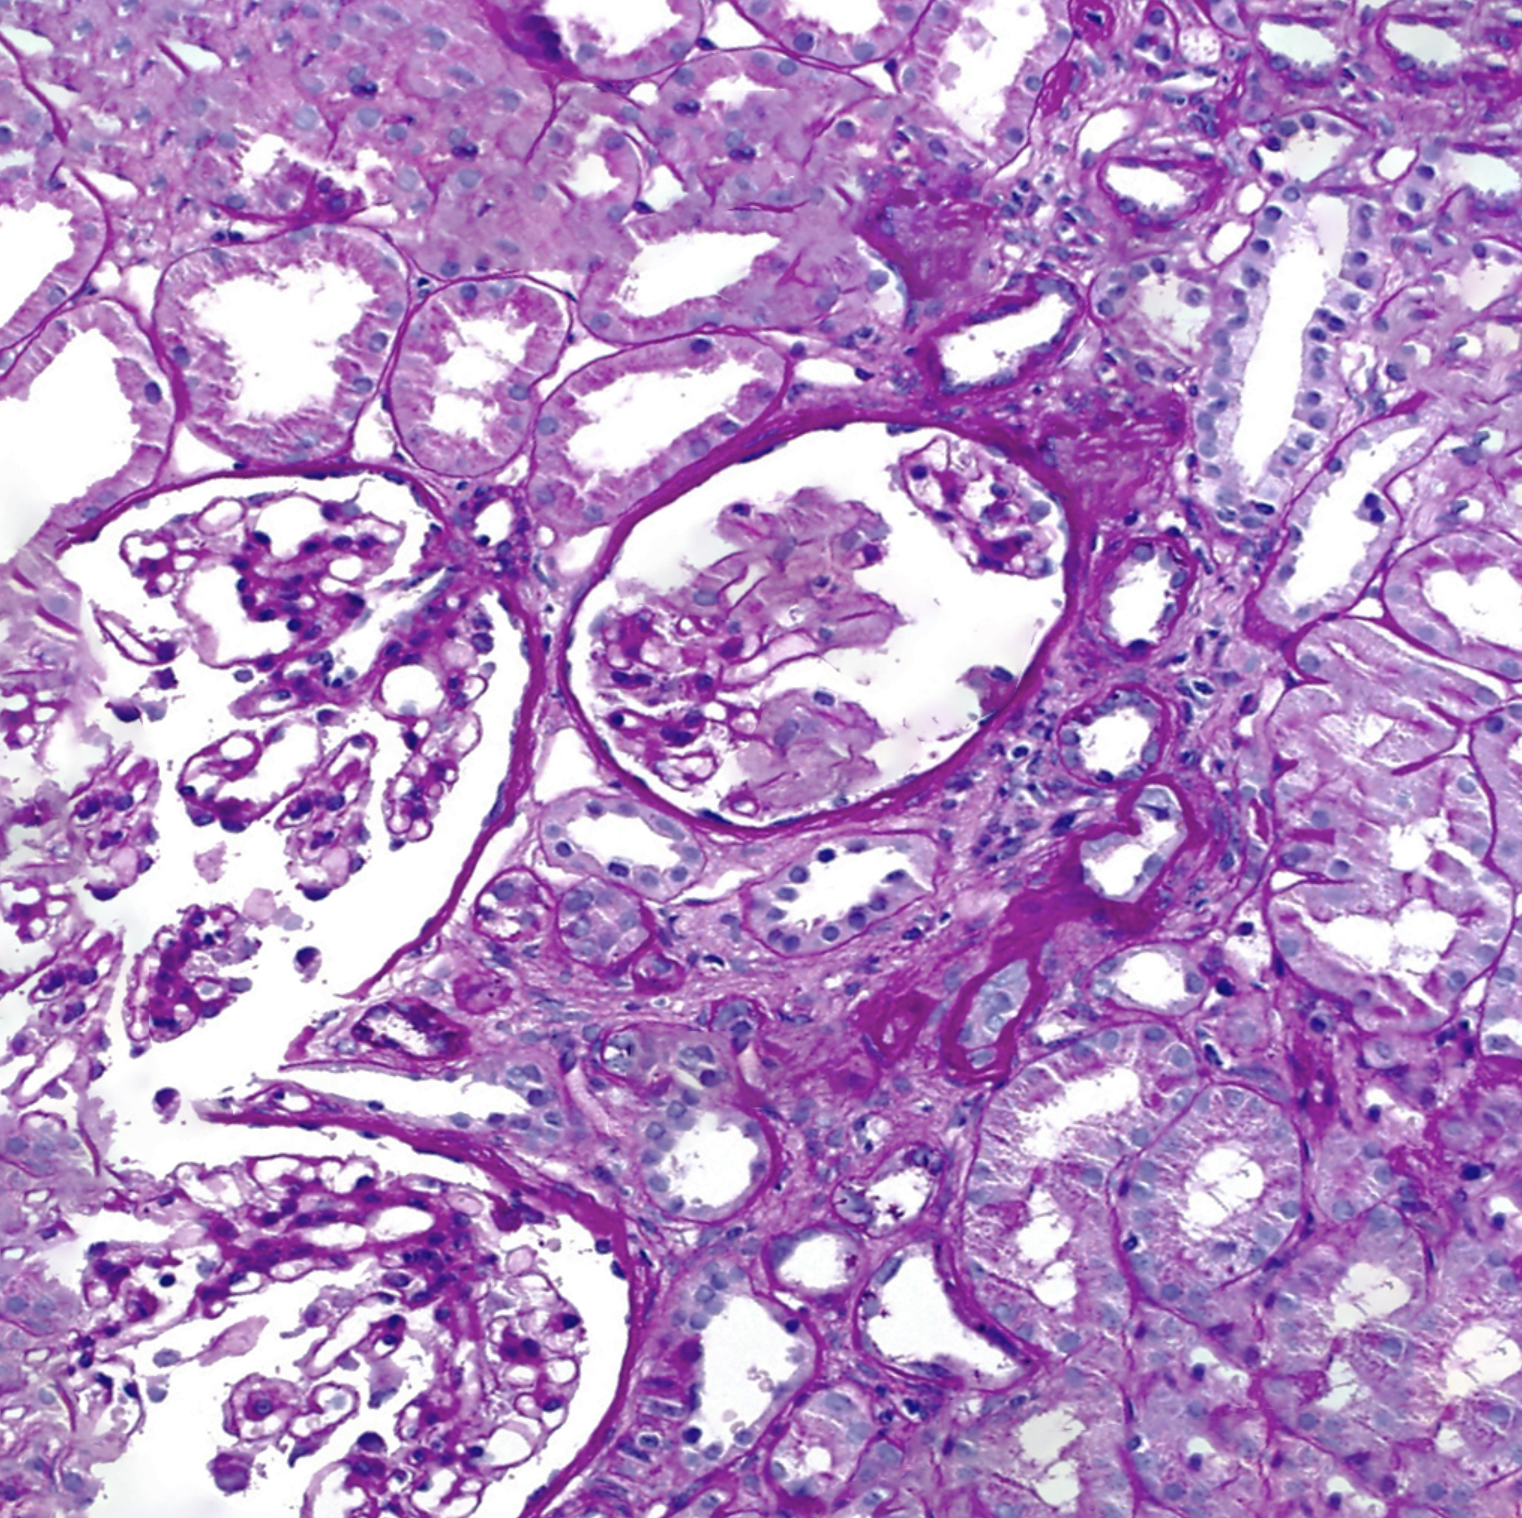 Kidney biopsy showing glomeruli in Alport syndrome.